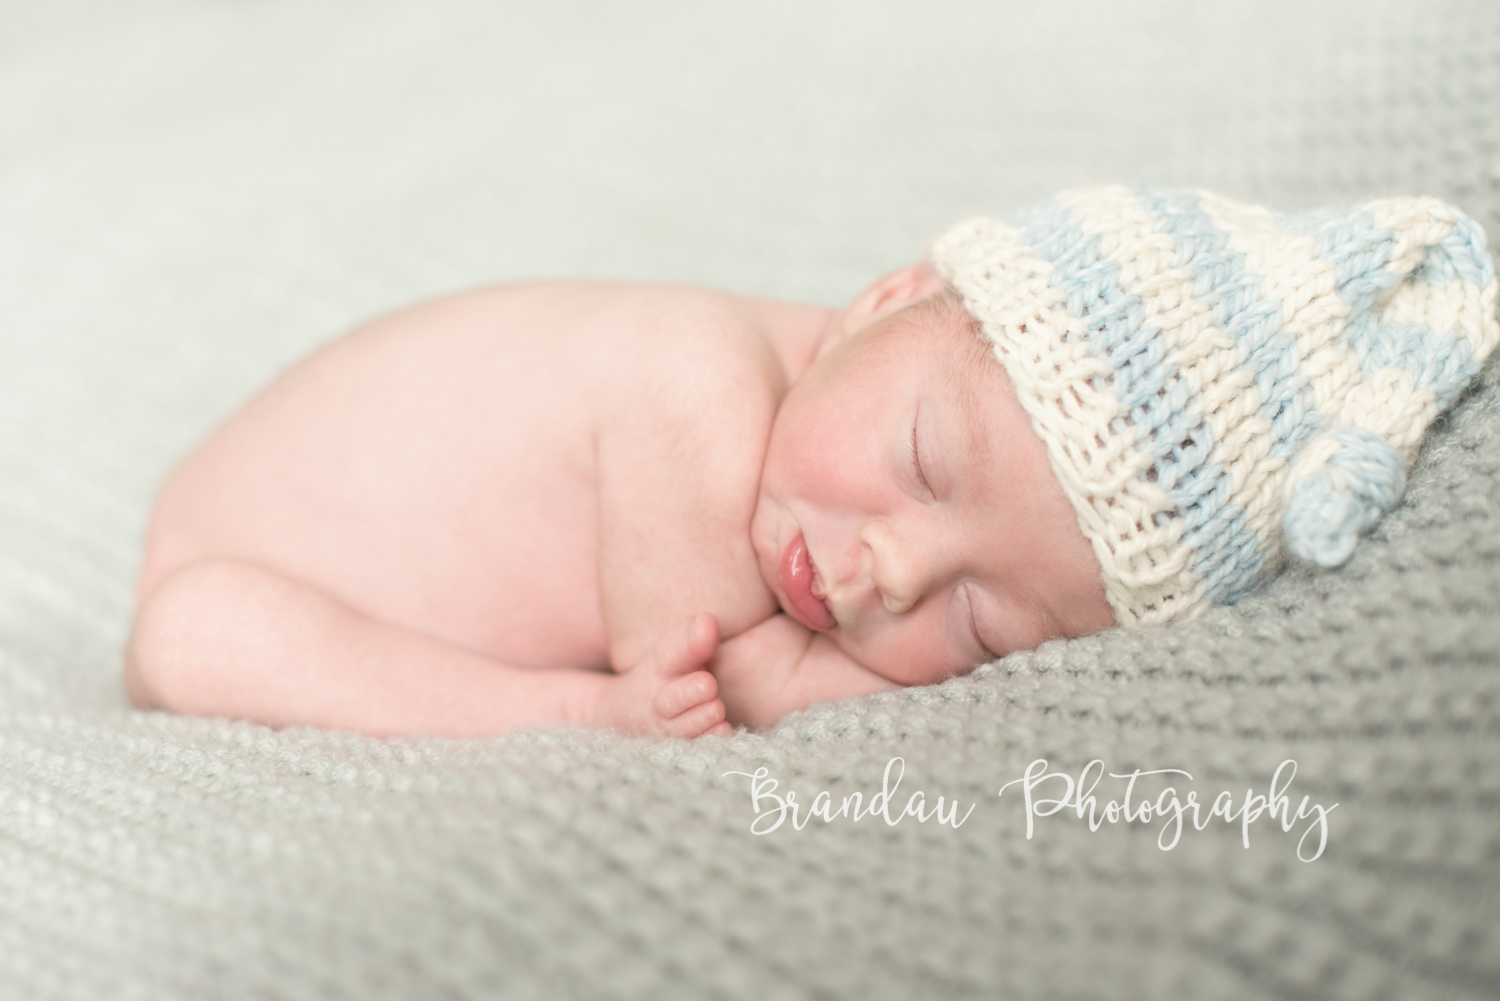 Brandau Photography - Central Iowa Newborn 050816-7.jpg